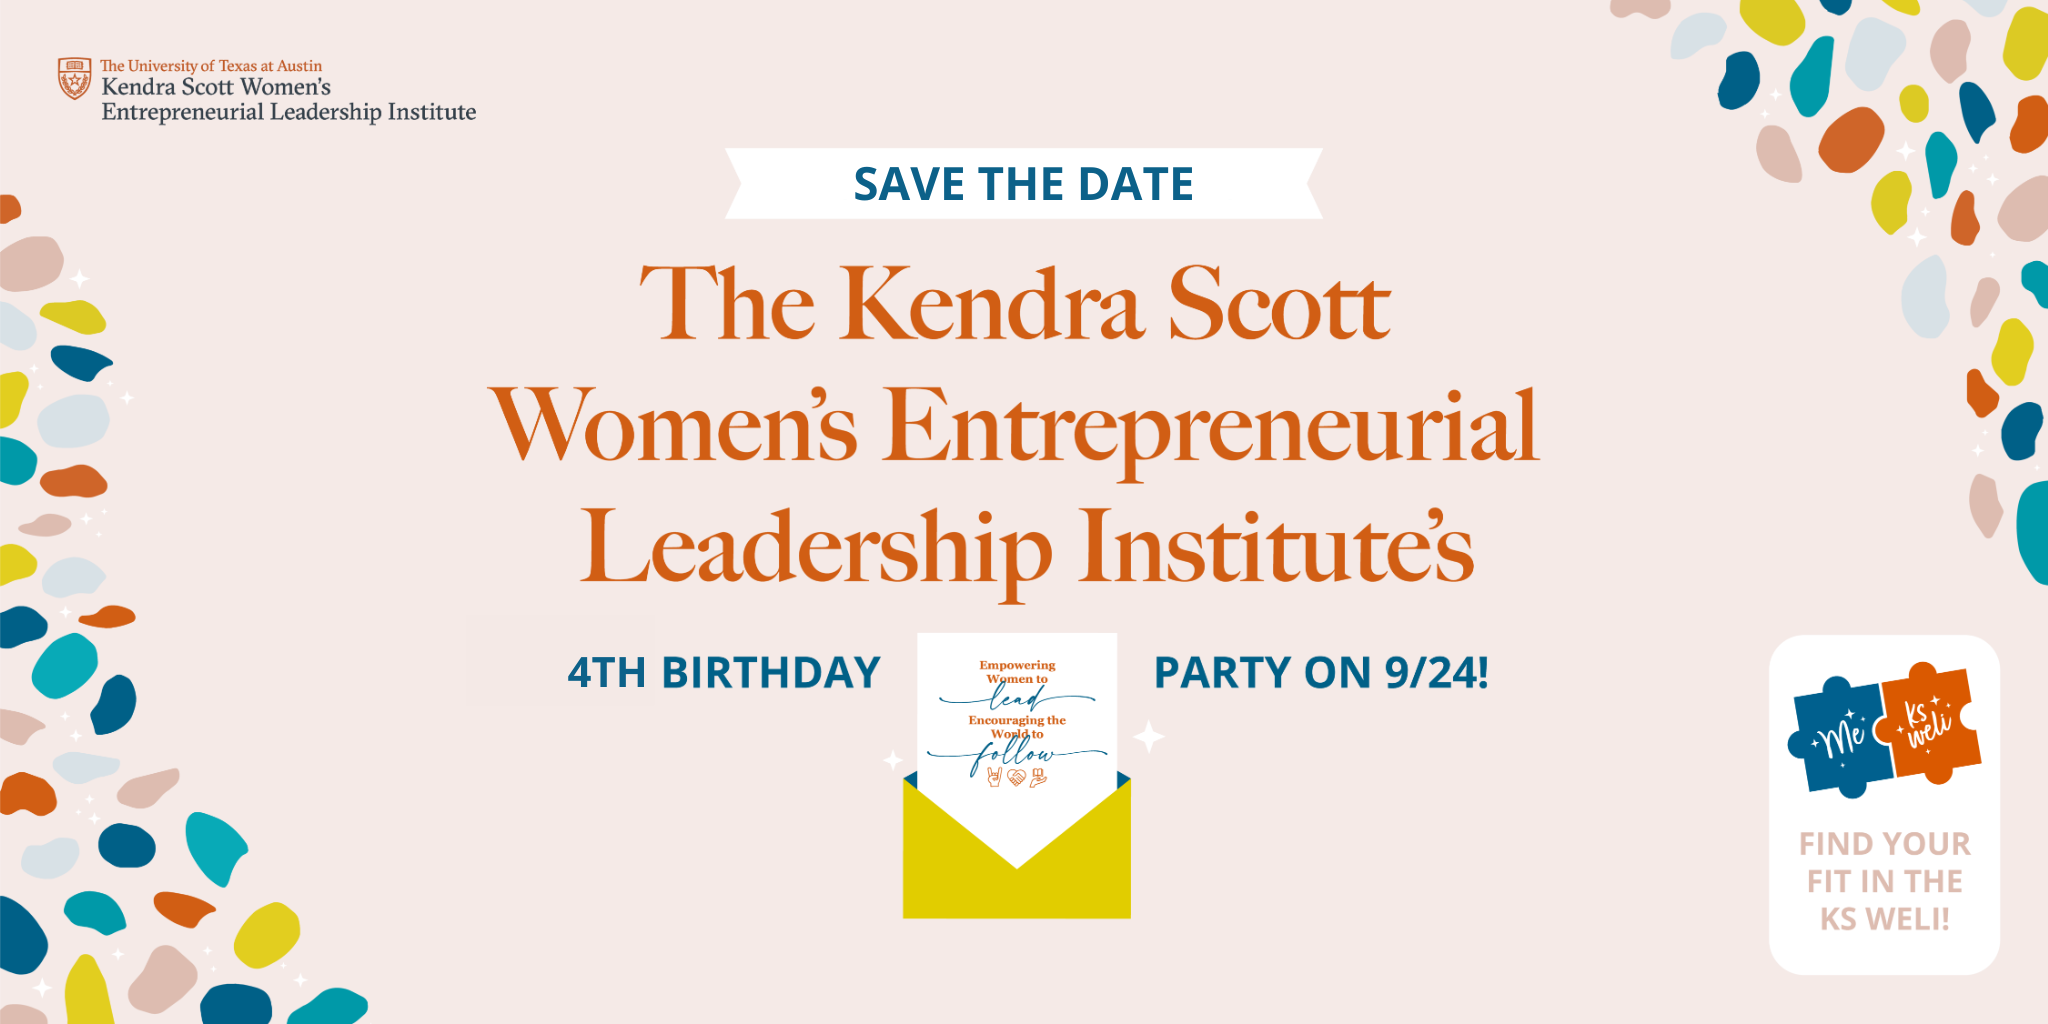 The Kendra Scott Women's Entrepreneurial Leadership Institute's 4th Birthday Party